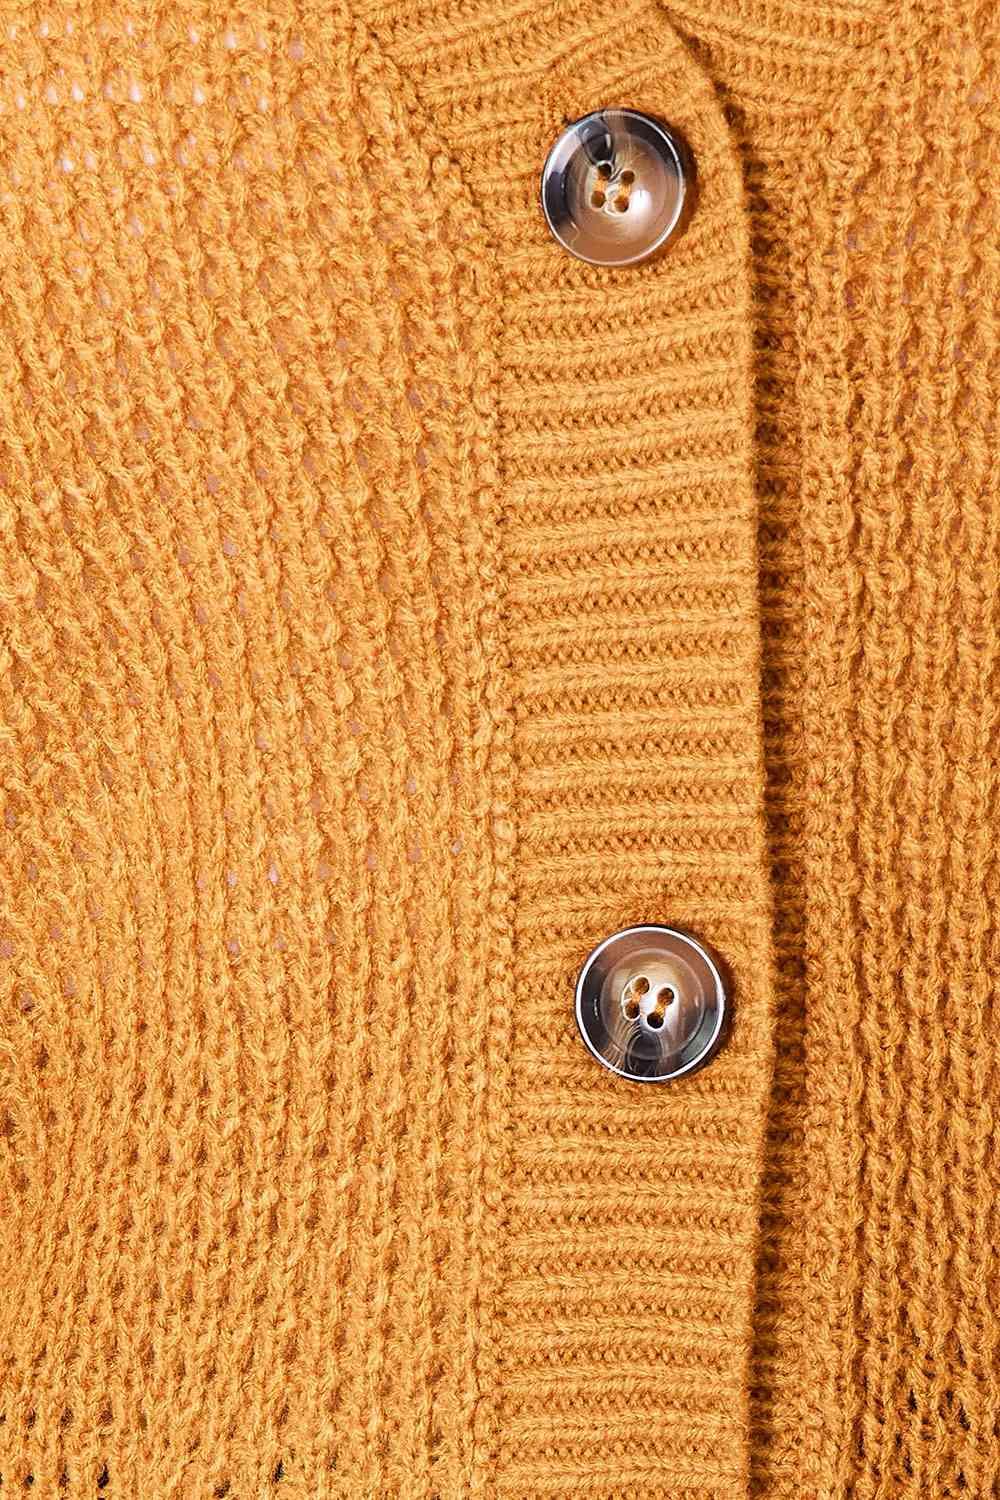 Bona Fide Fashion - Drop Shoulder Button Down Cardigan with Pockets - Women Fashion - Bona Fide Fashion